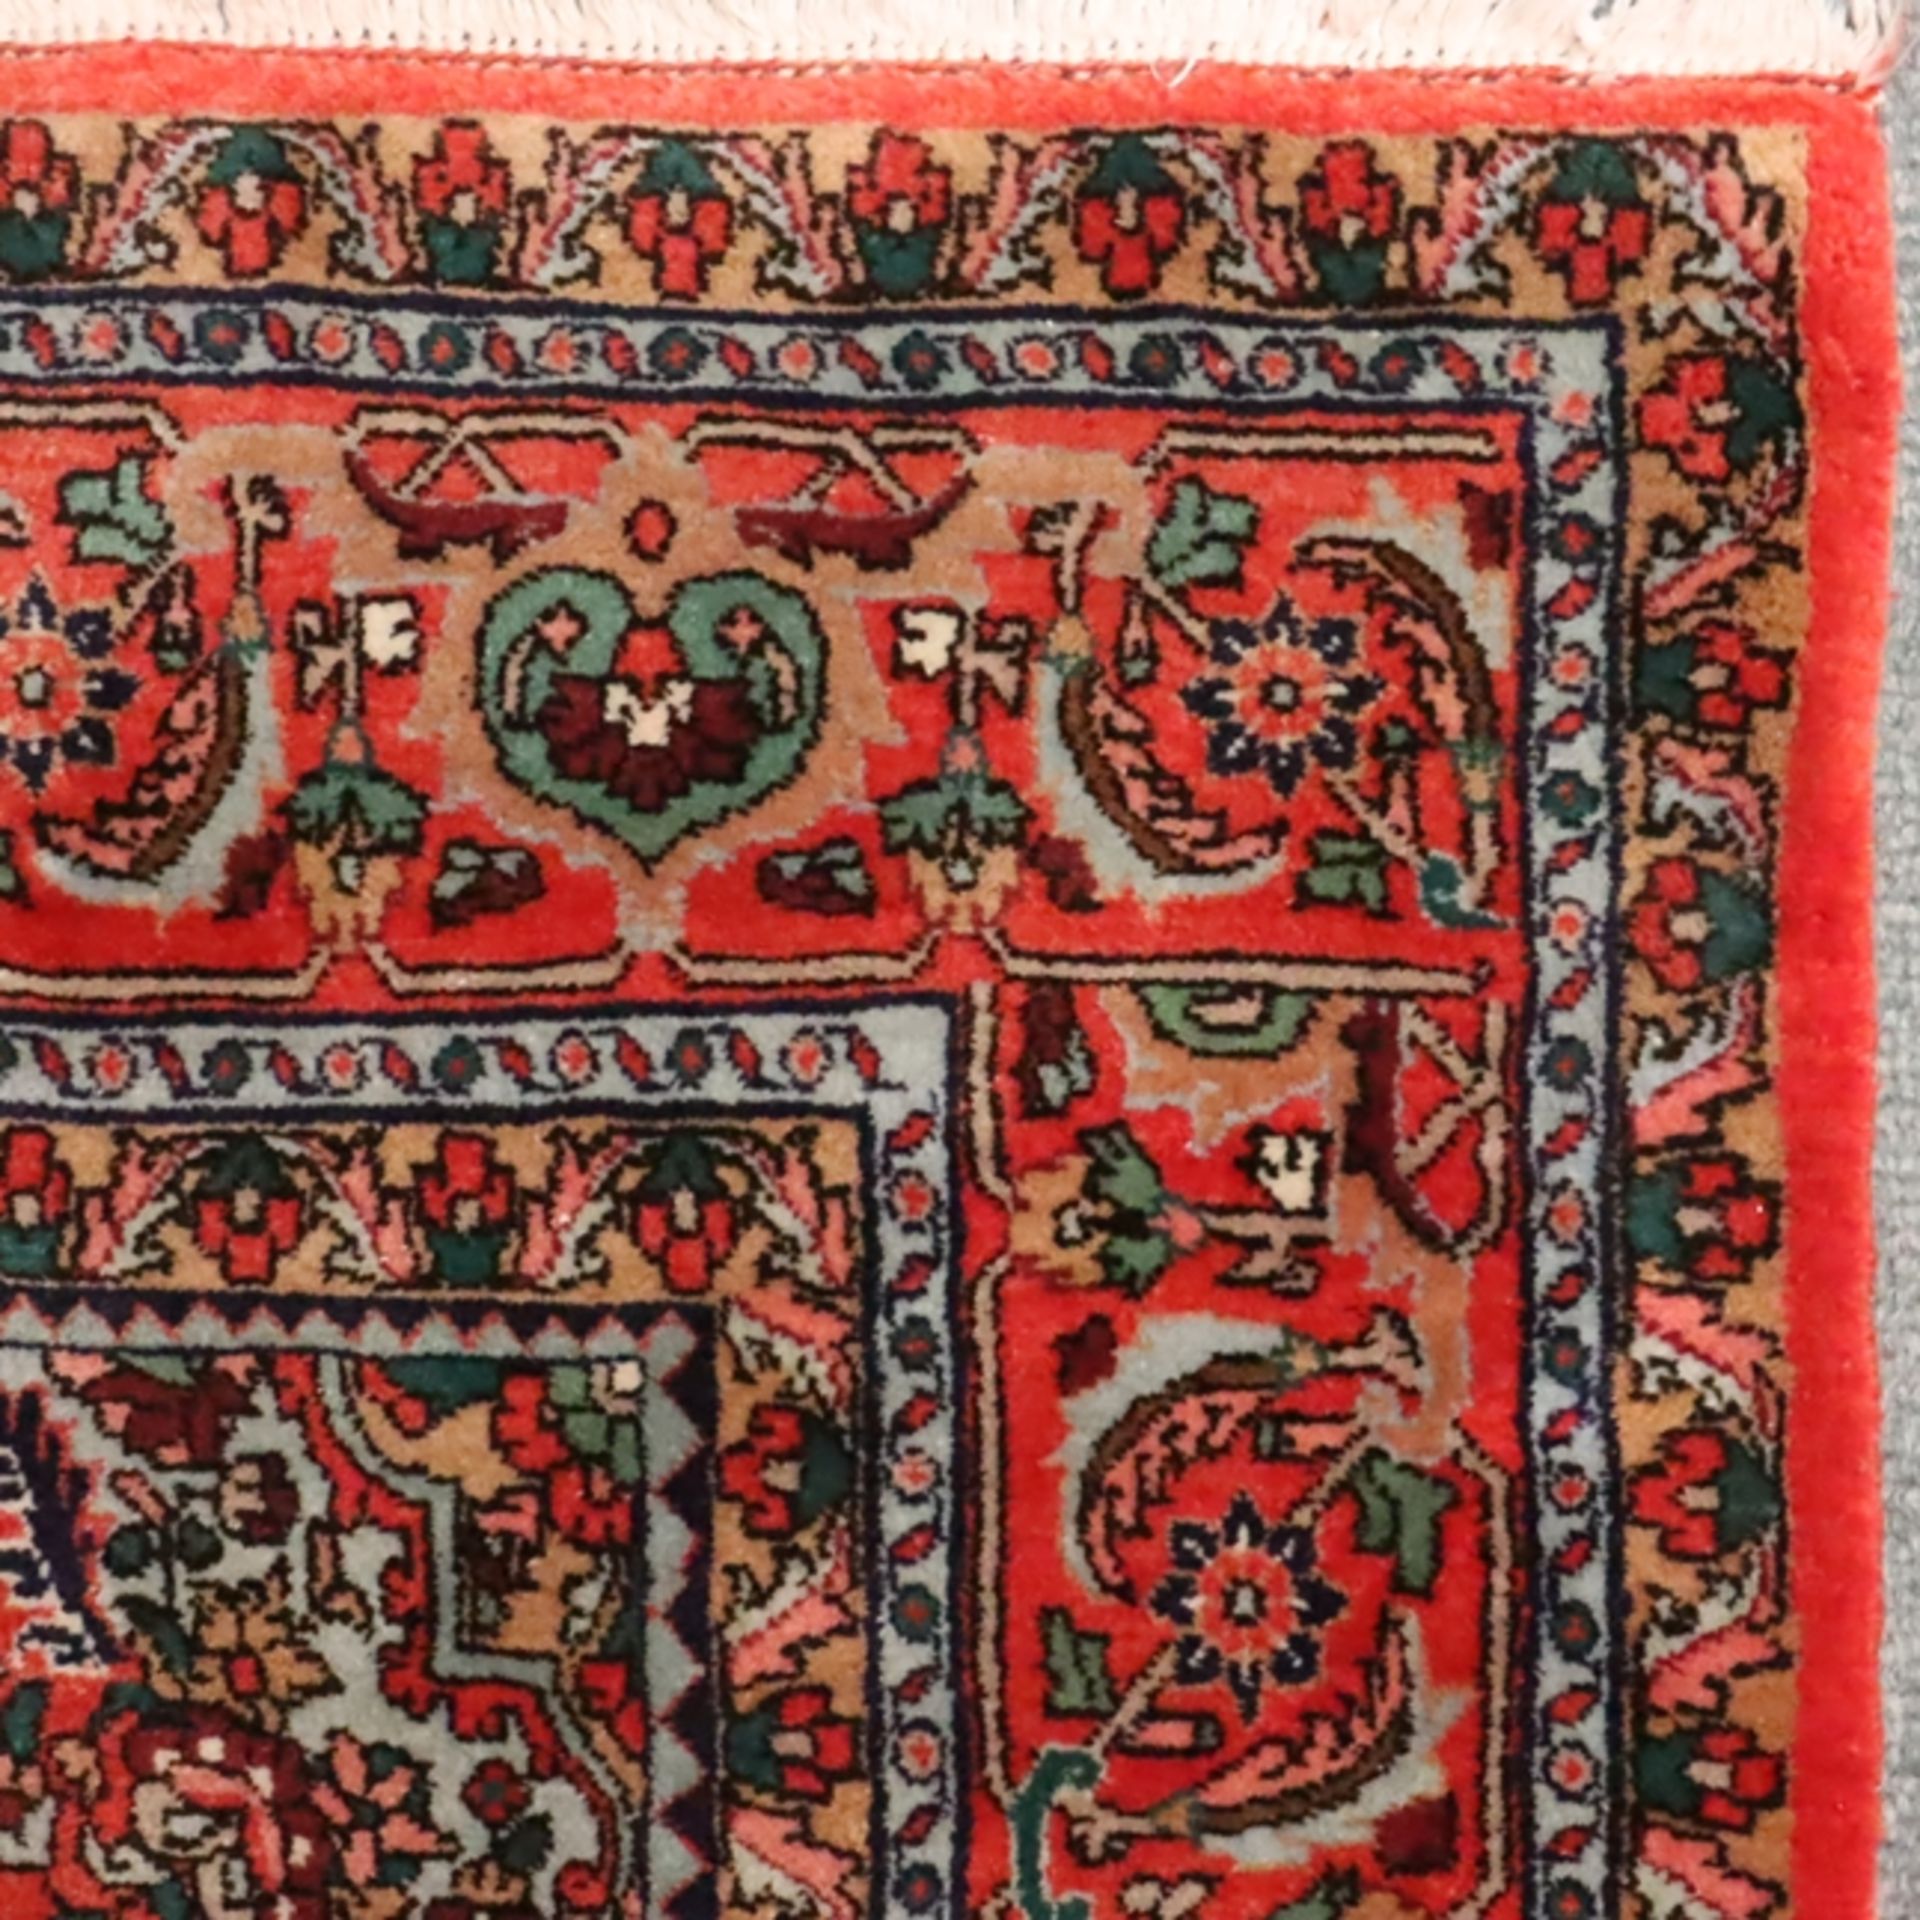 Bidjar - Persien, Wolle, rotgrundig, zentrales Medaillon, ornamentales und florales Muster, mehrfac - Bild 5 aus 7